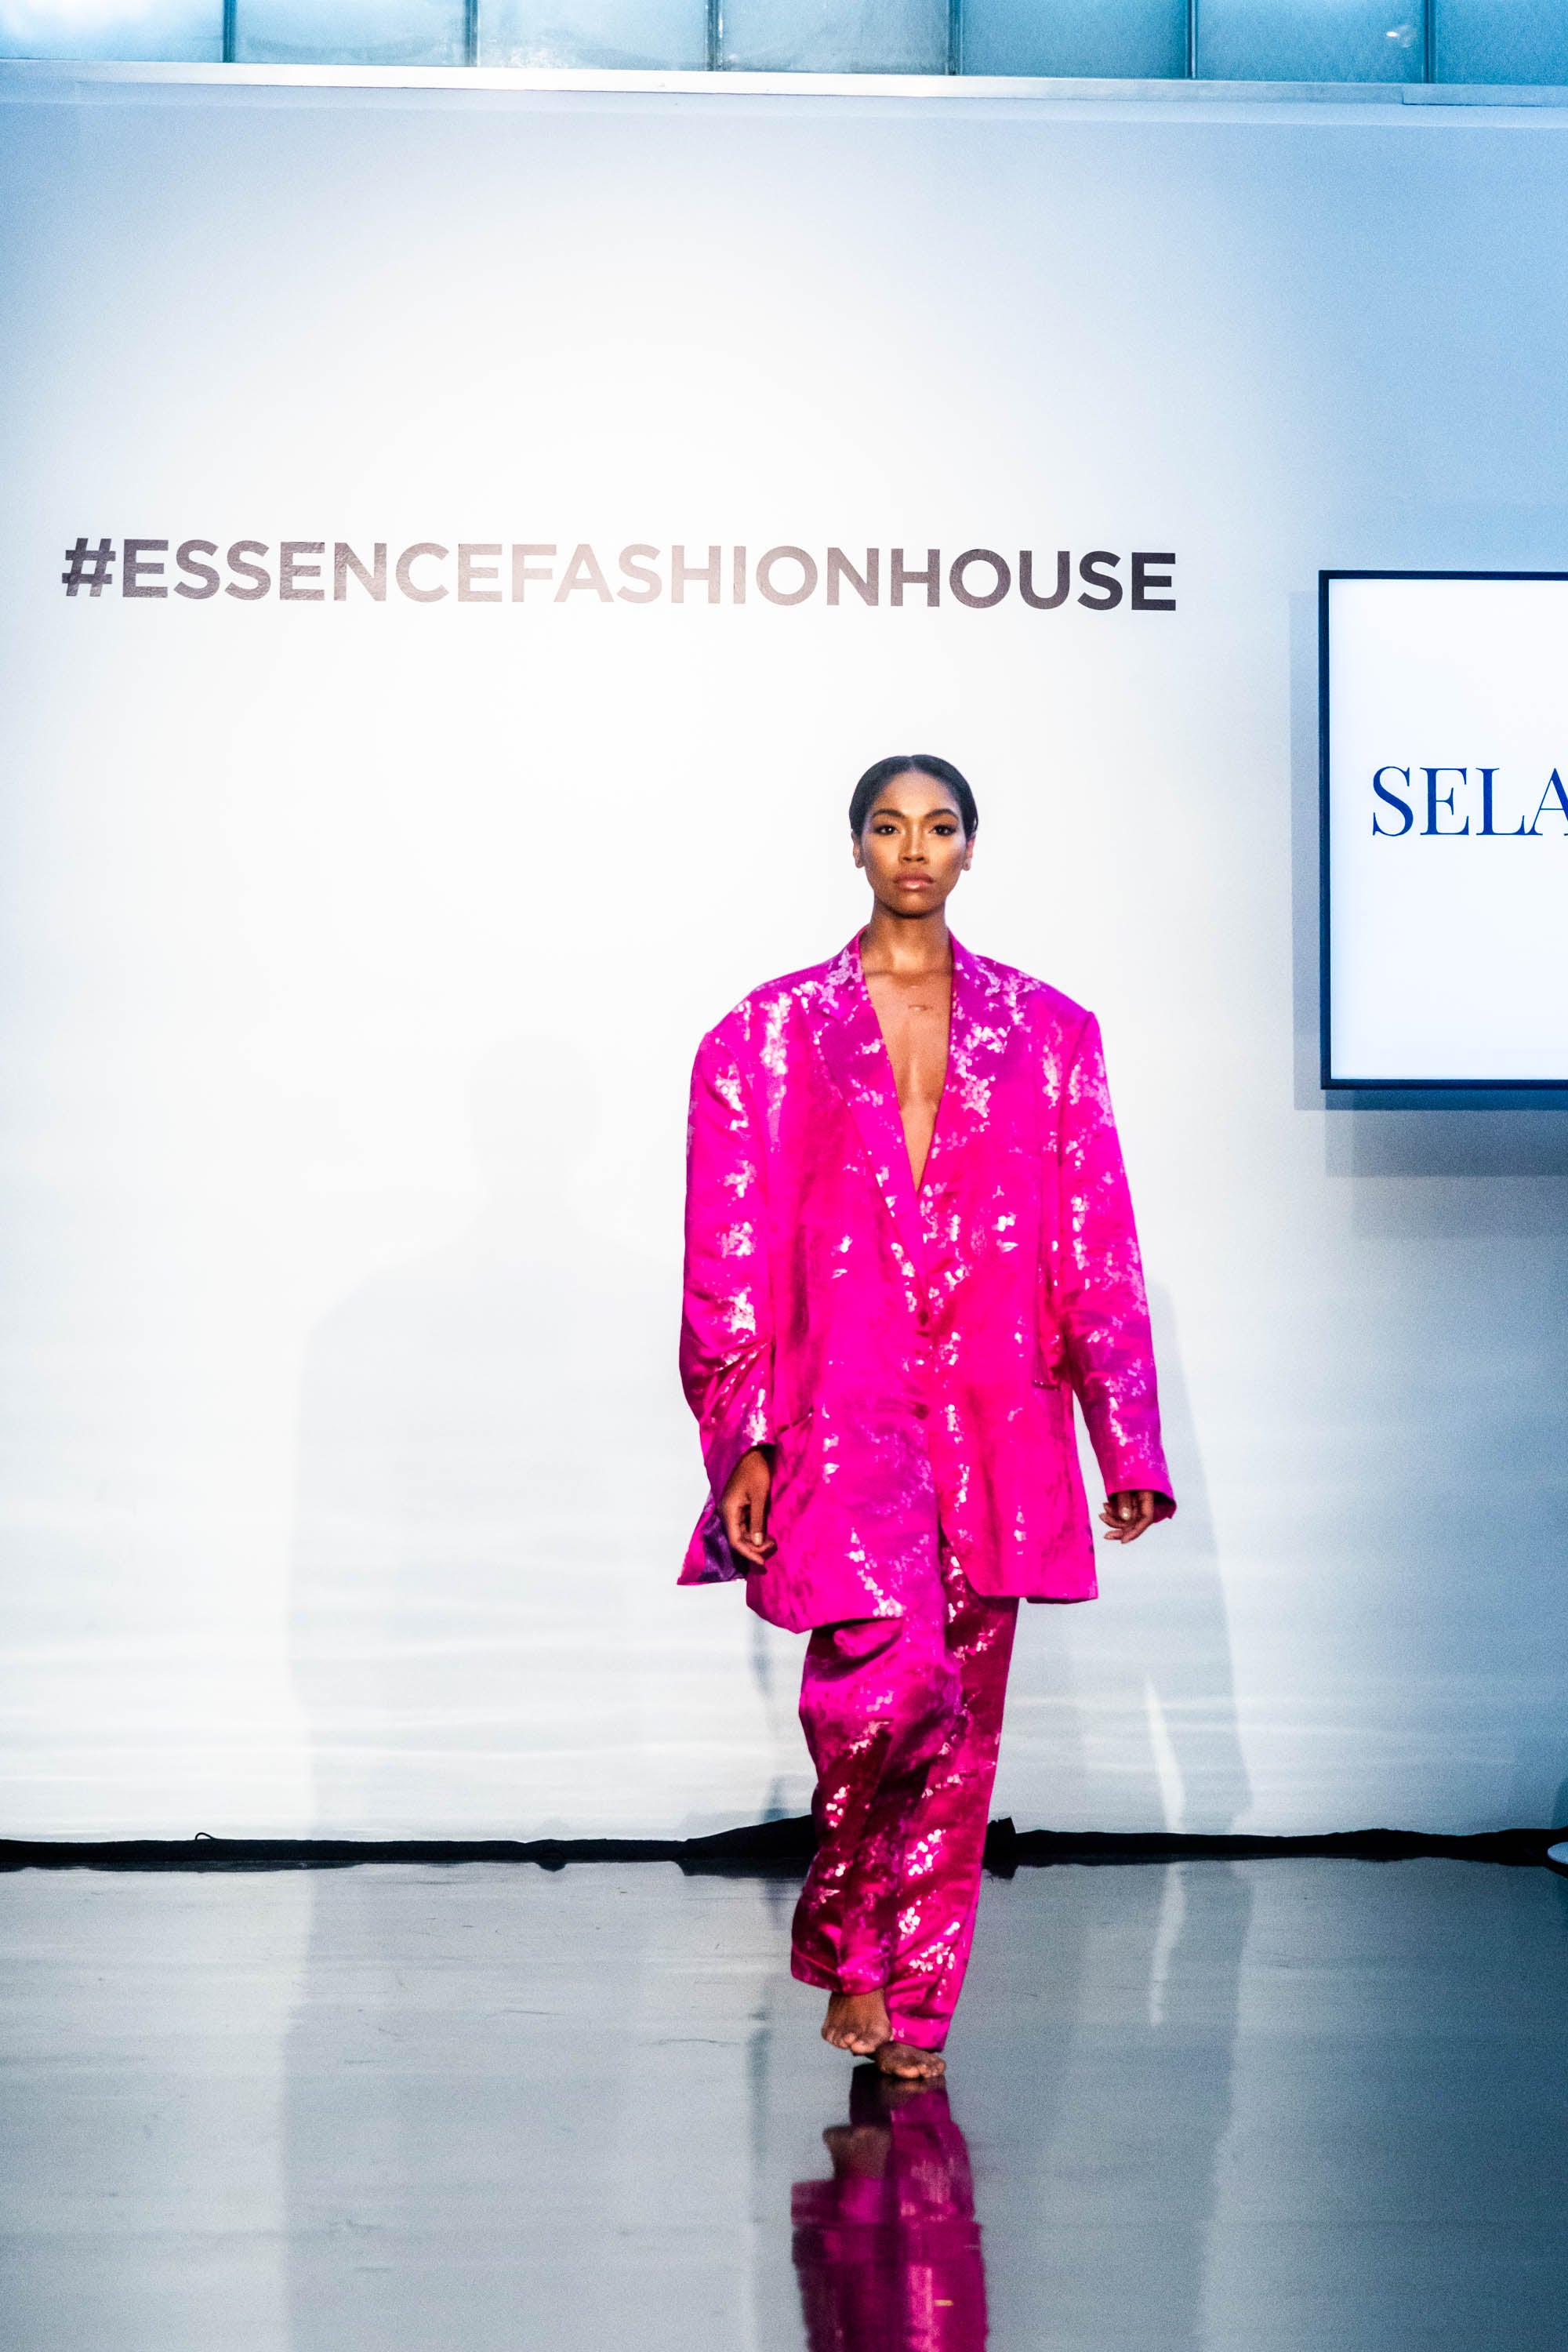 ESSENCE Fashion House NYC: Selam Fessahaye Wowed The Crowd With Avant-Garde Looks